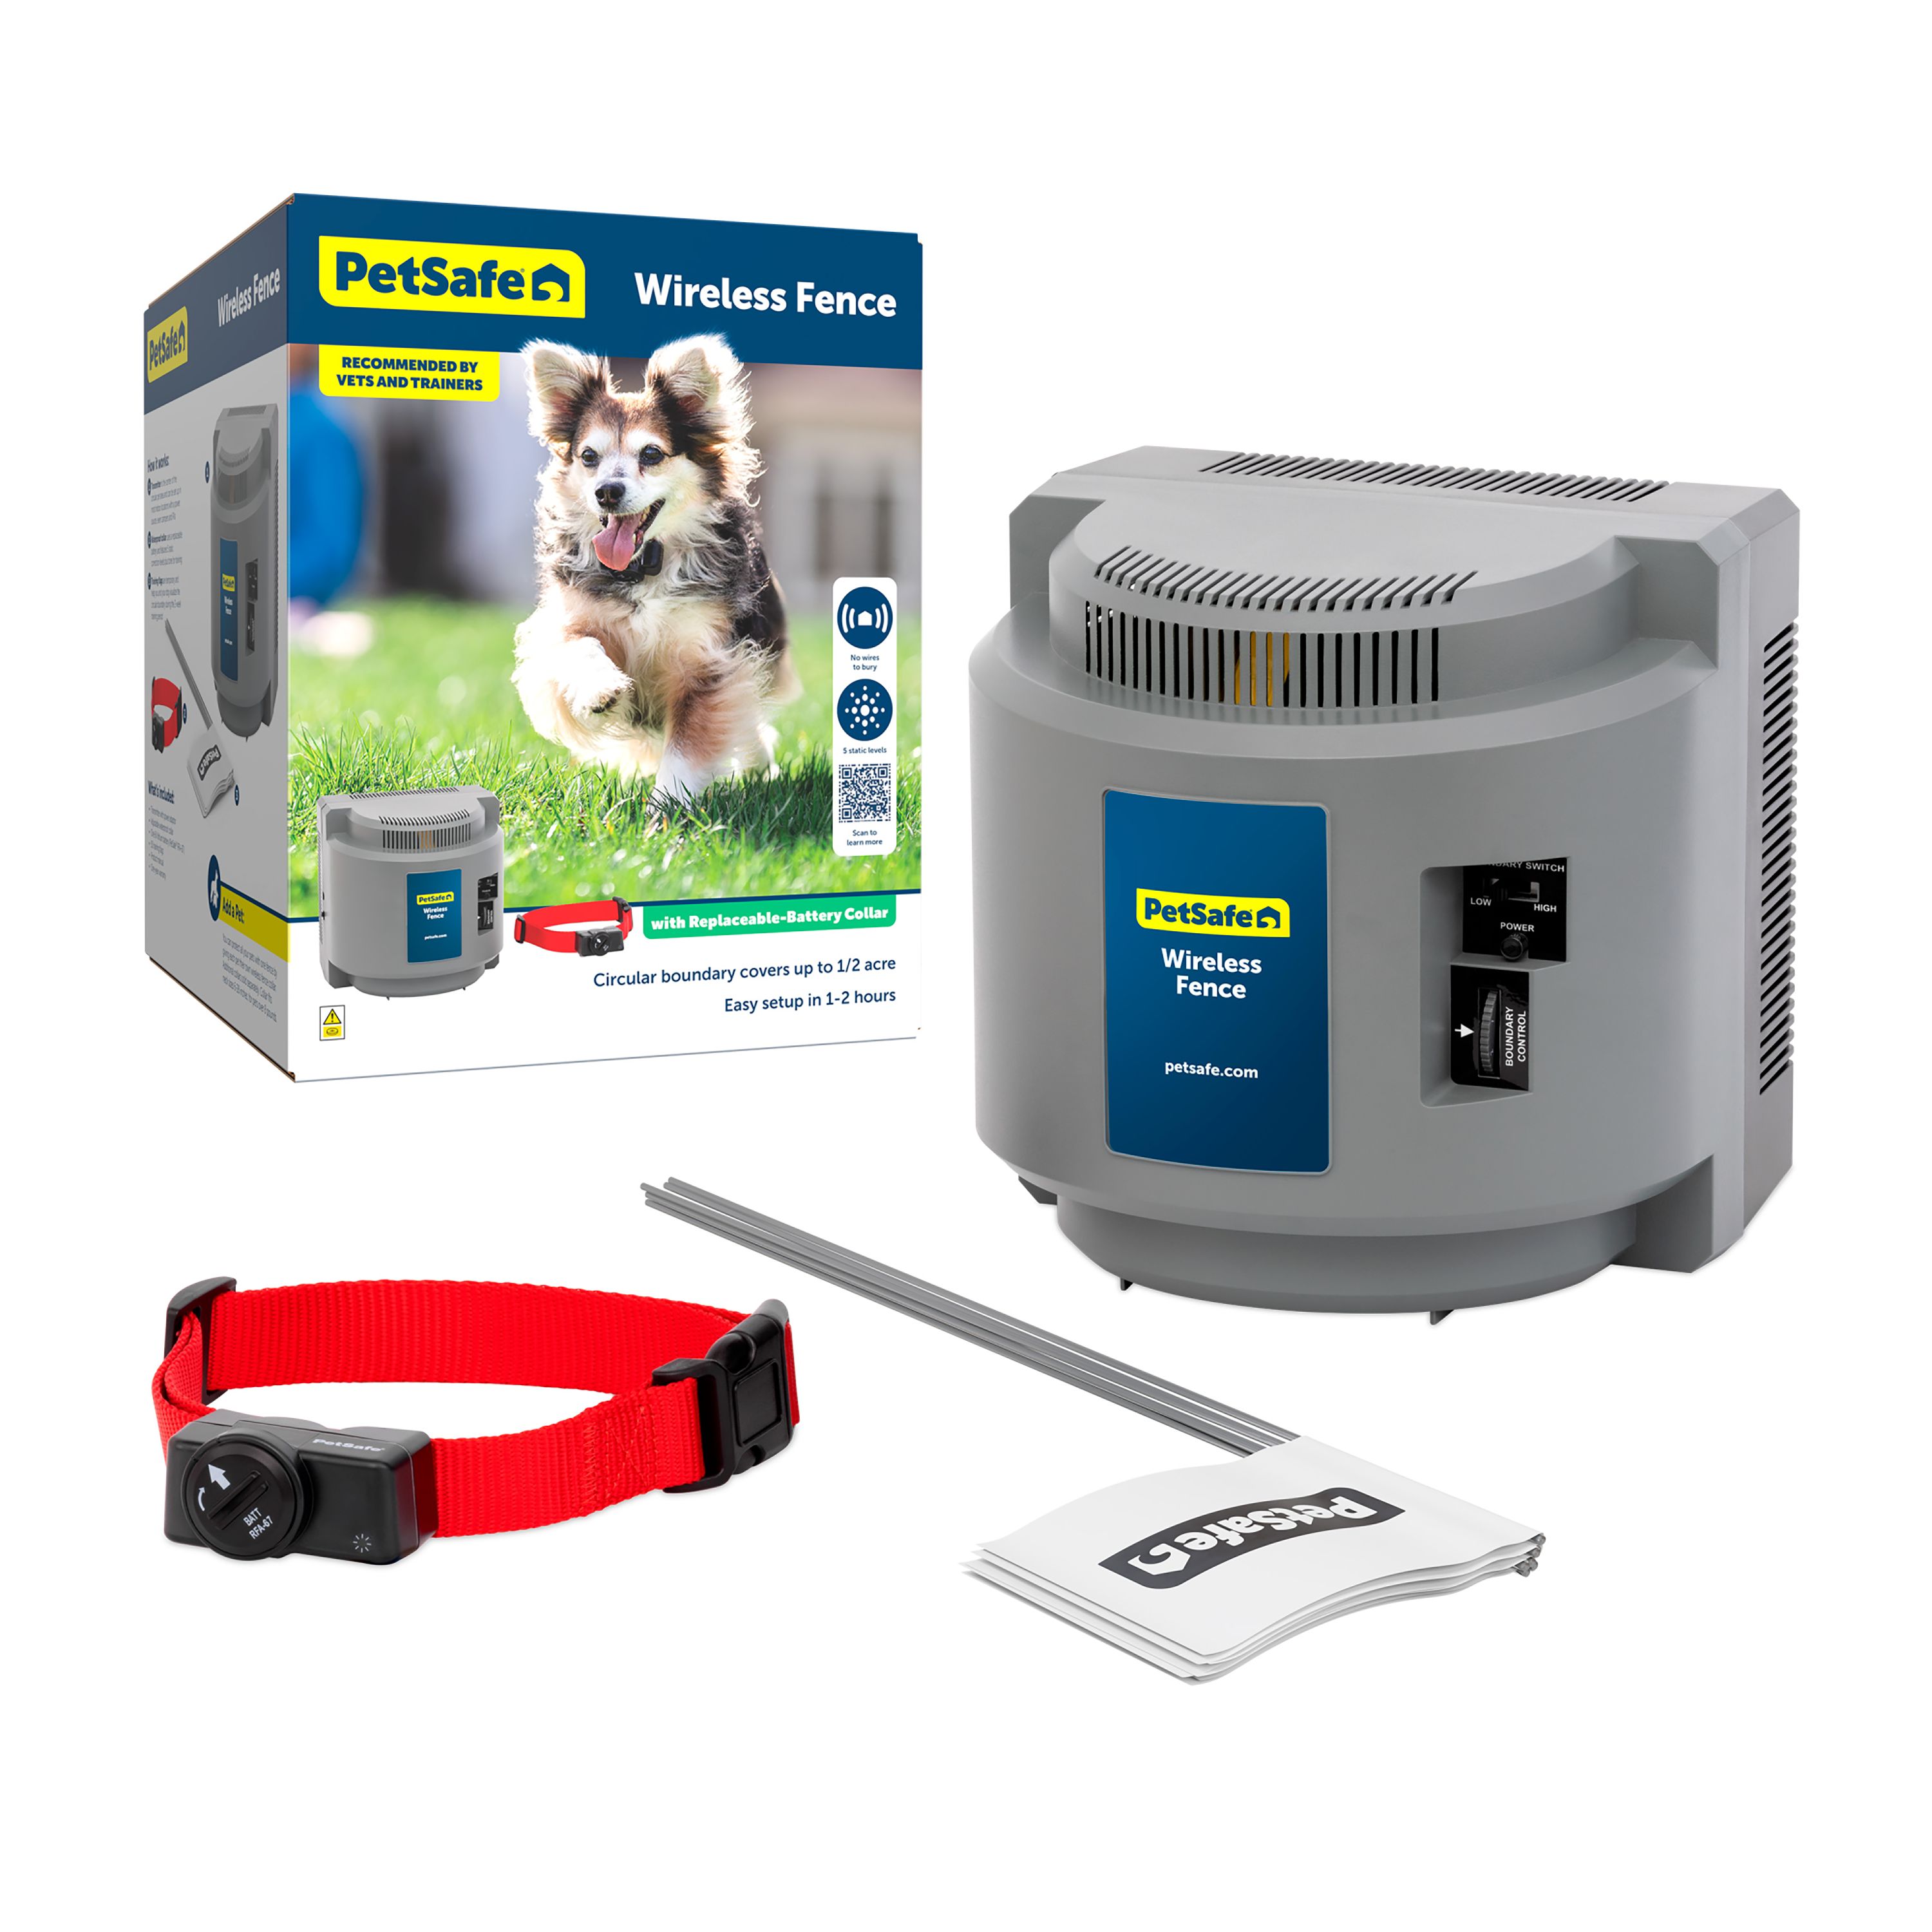 petsmart wireless pet containment system